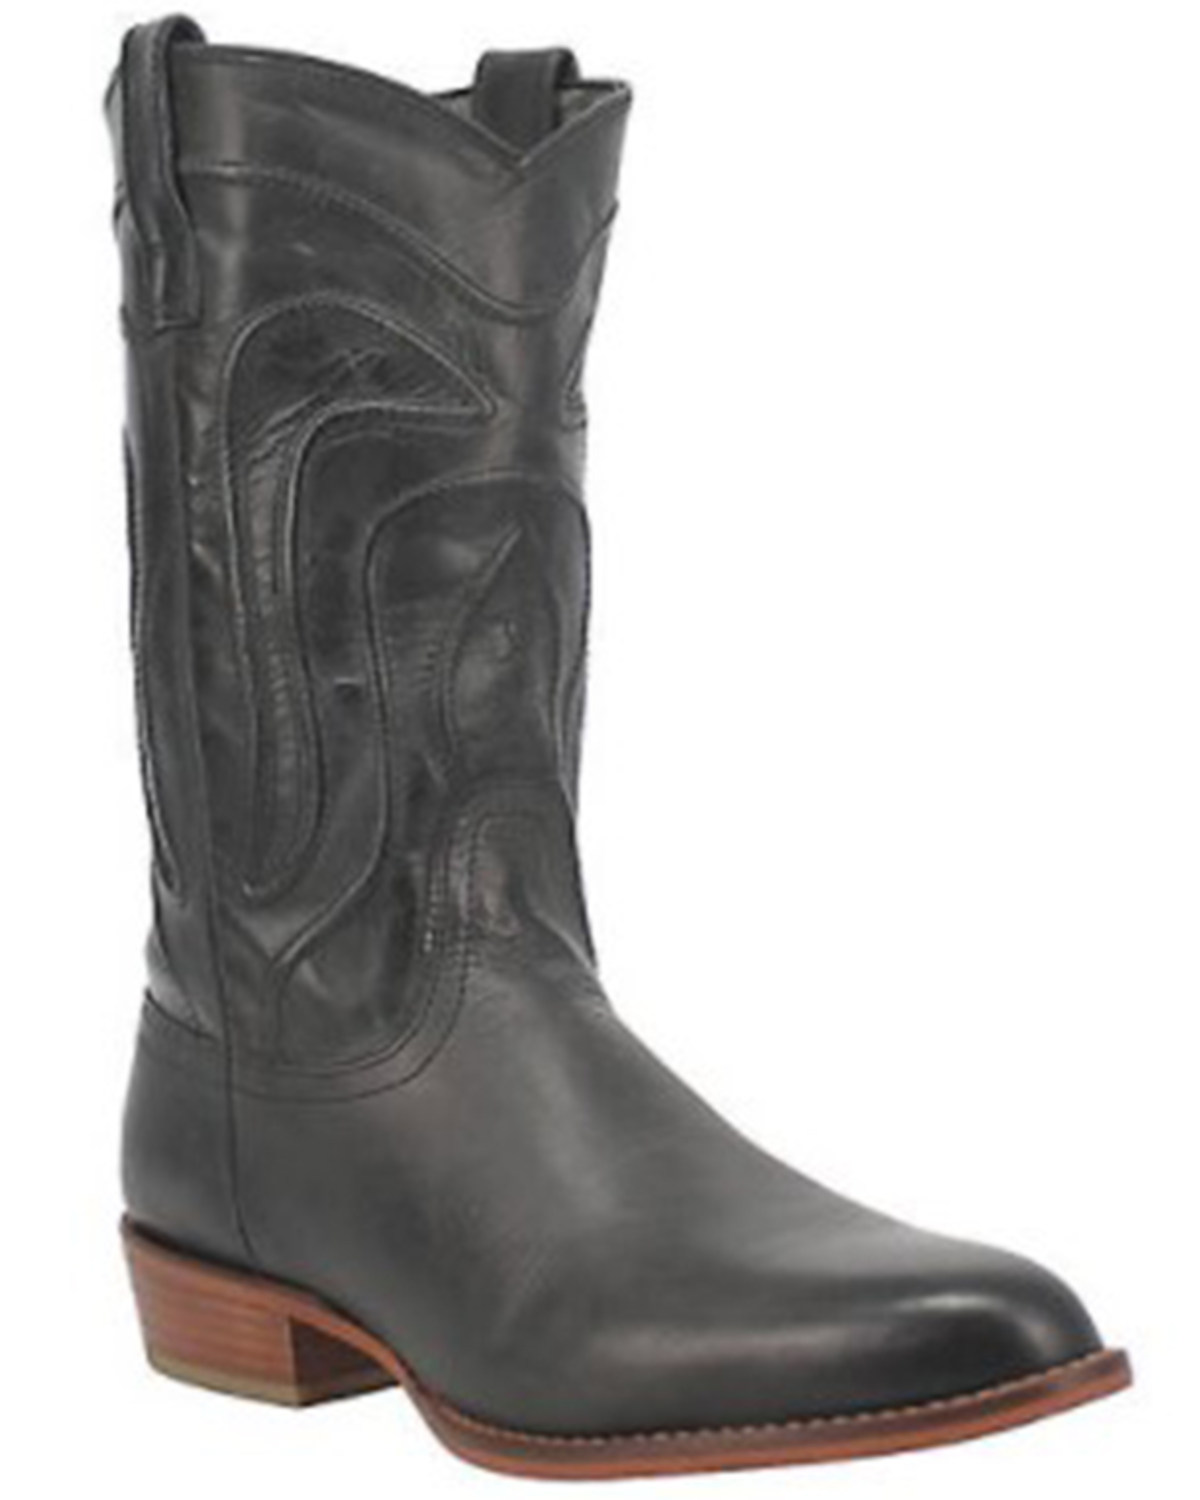 Dingo Men's Montana Western Boots - Round Toe